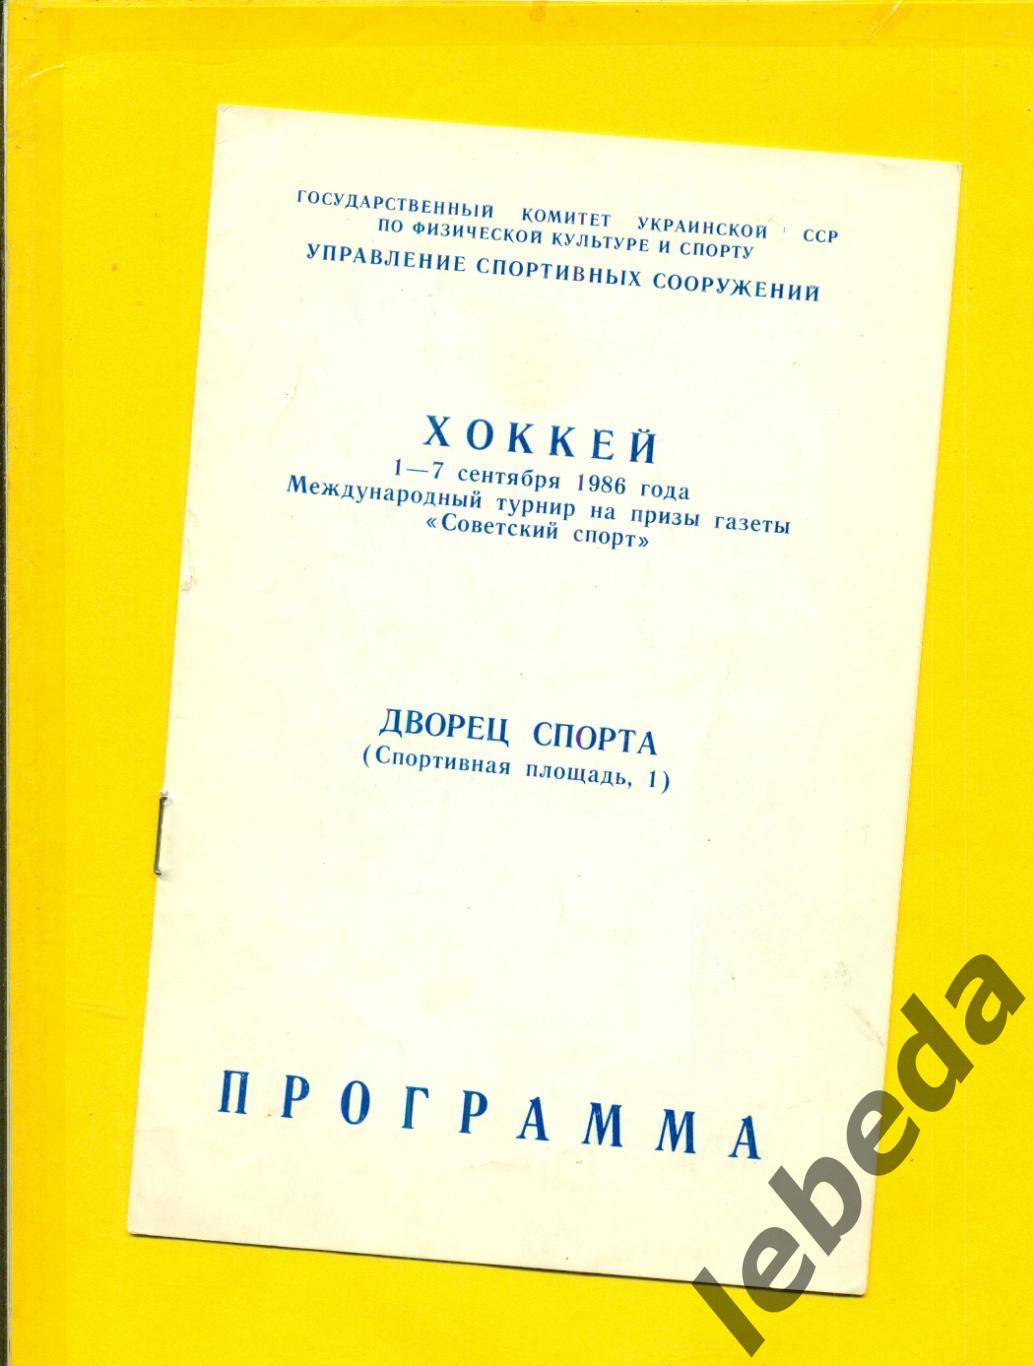 Киев - 1986 г.Турнир ( 1-7.09.1986.) Советский Спорт.